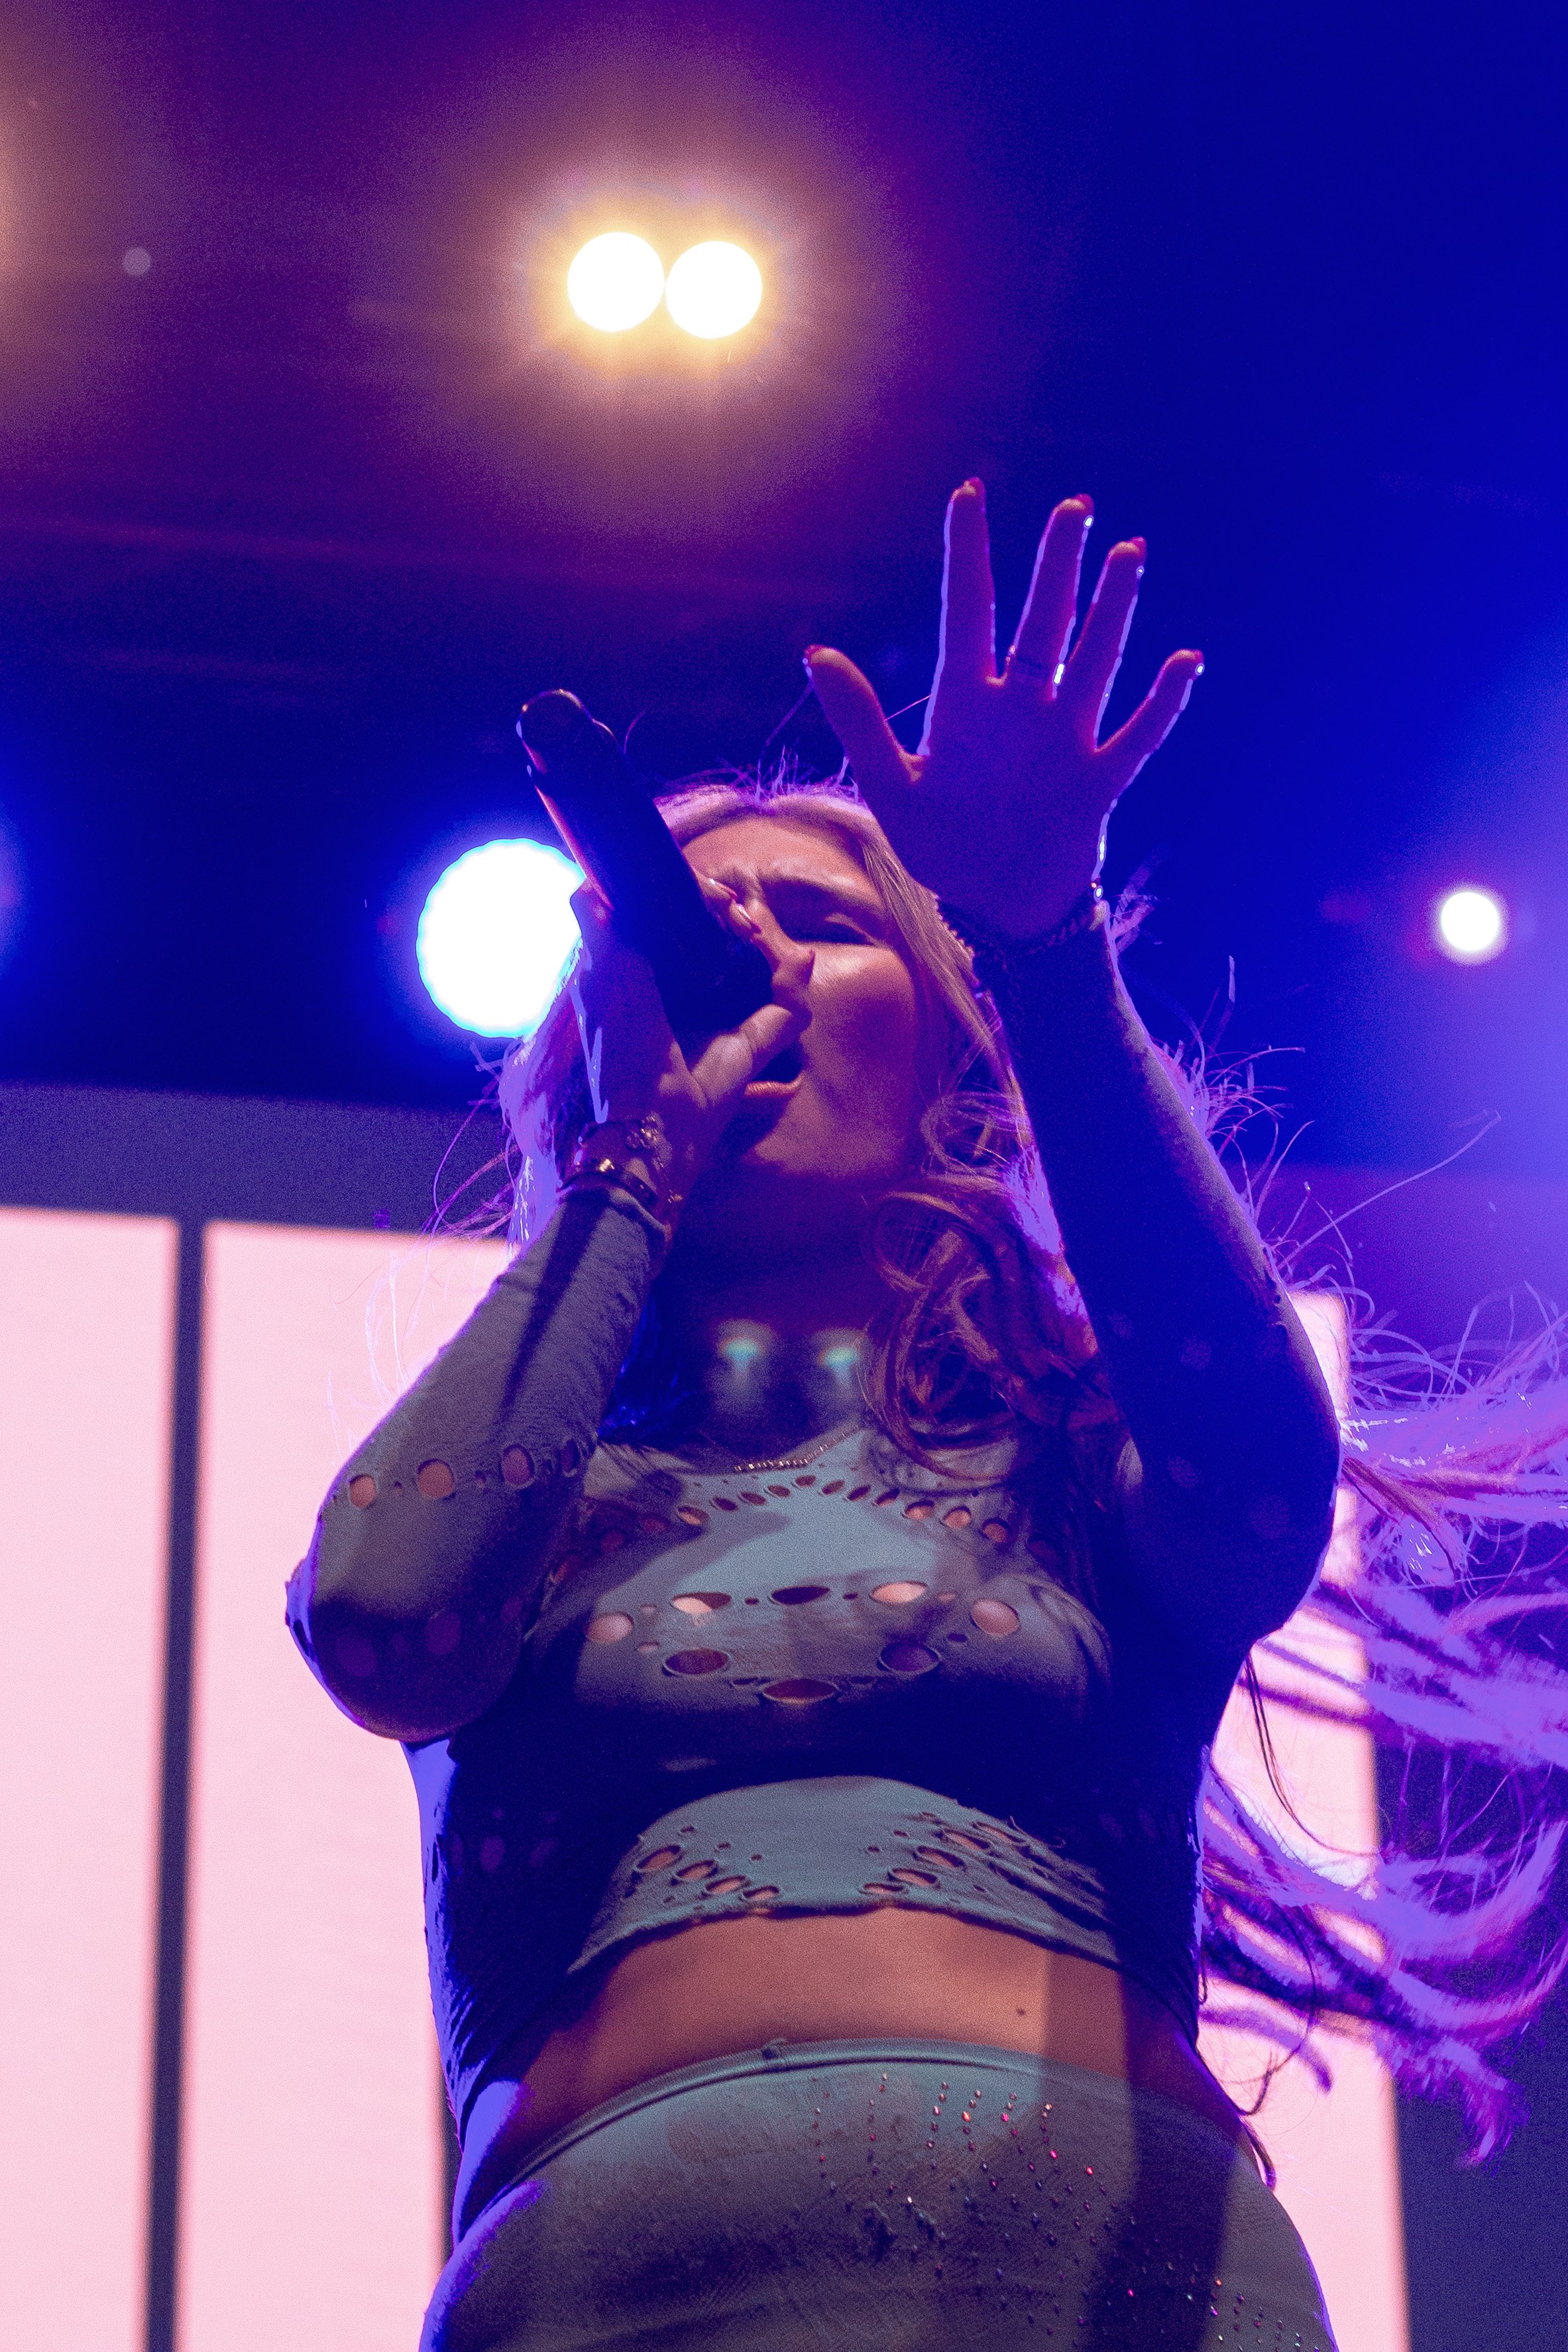   Pop artist Mimi Webb performs singles like “Dumb Love” and songs from her debut album,  Amelia . 